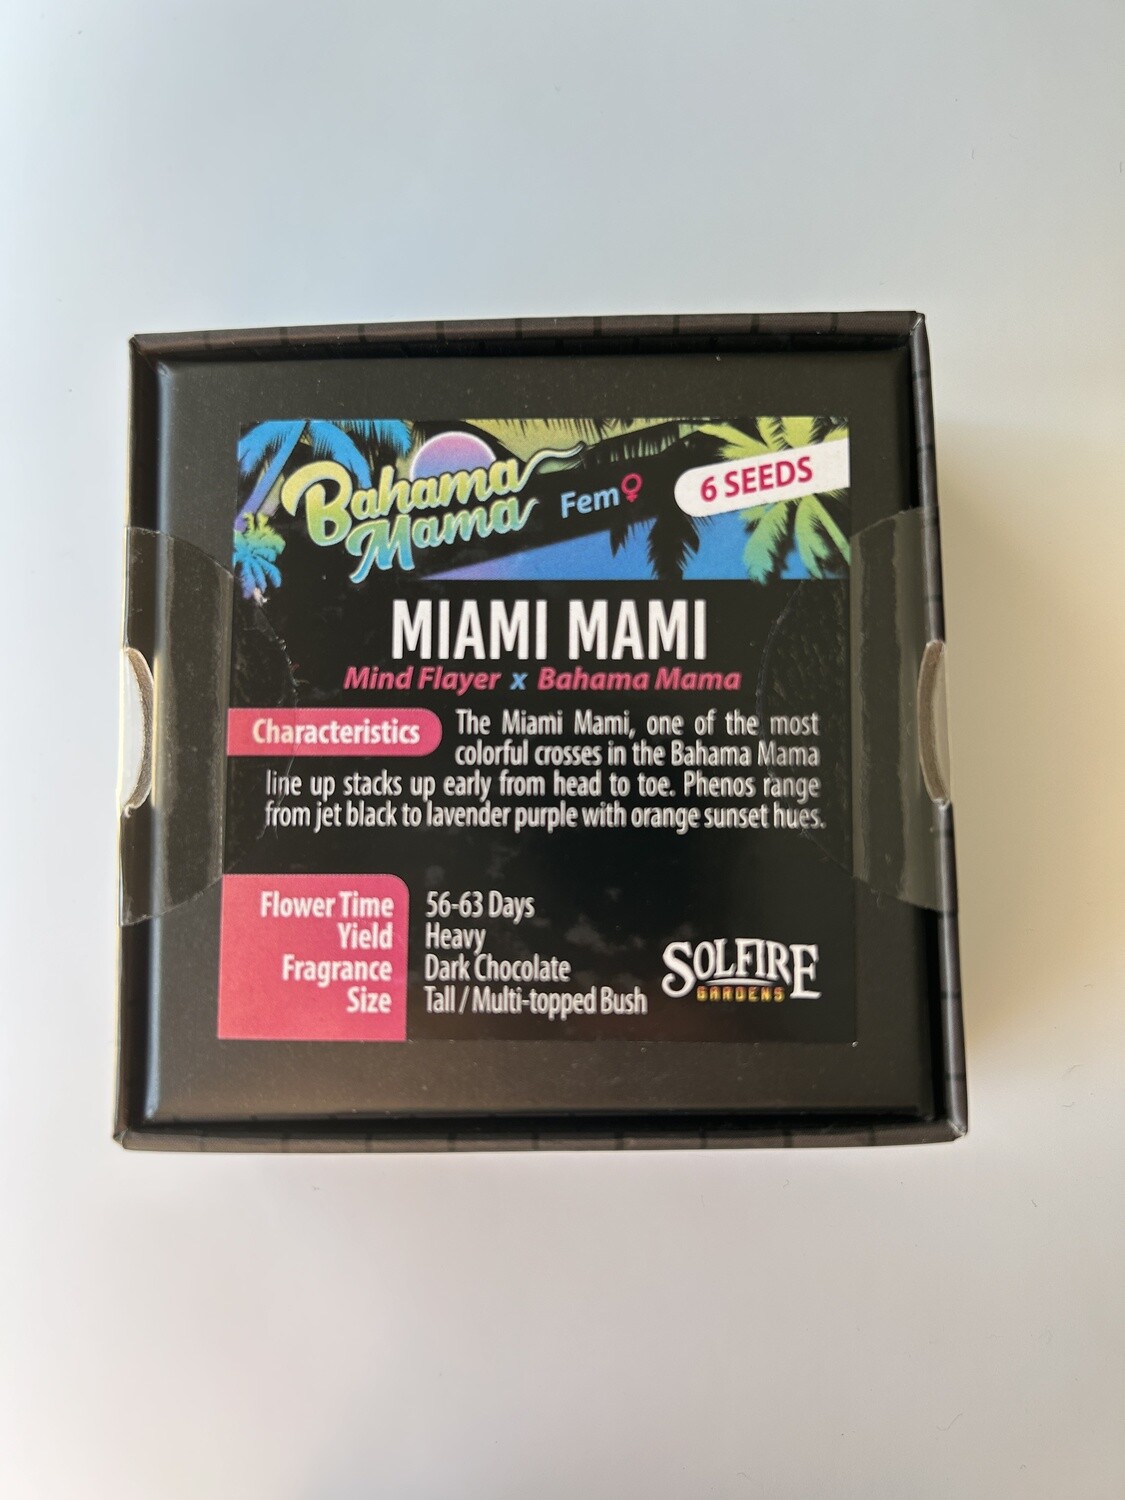 Miami Mami - 6 Fem Seeds - Sol Fire Genetics - *Personal Vault Item*